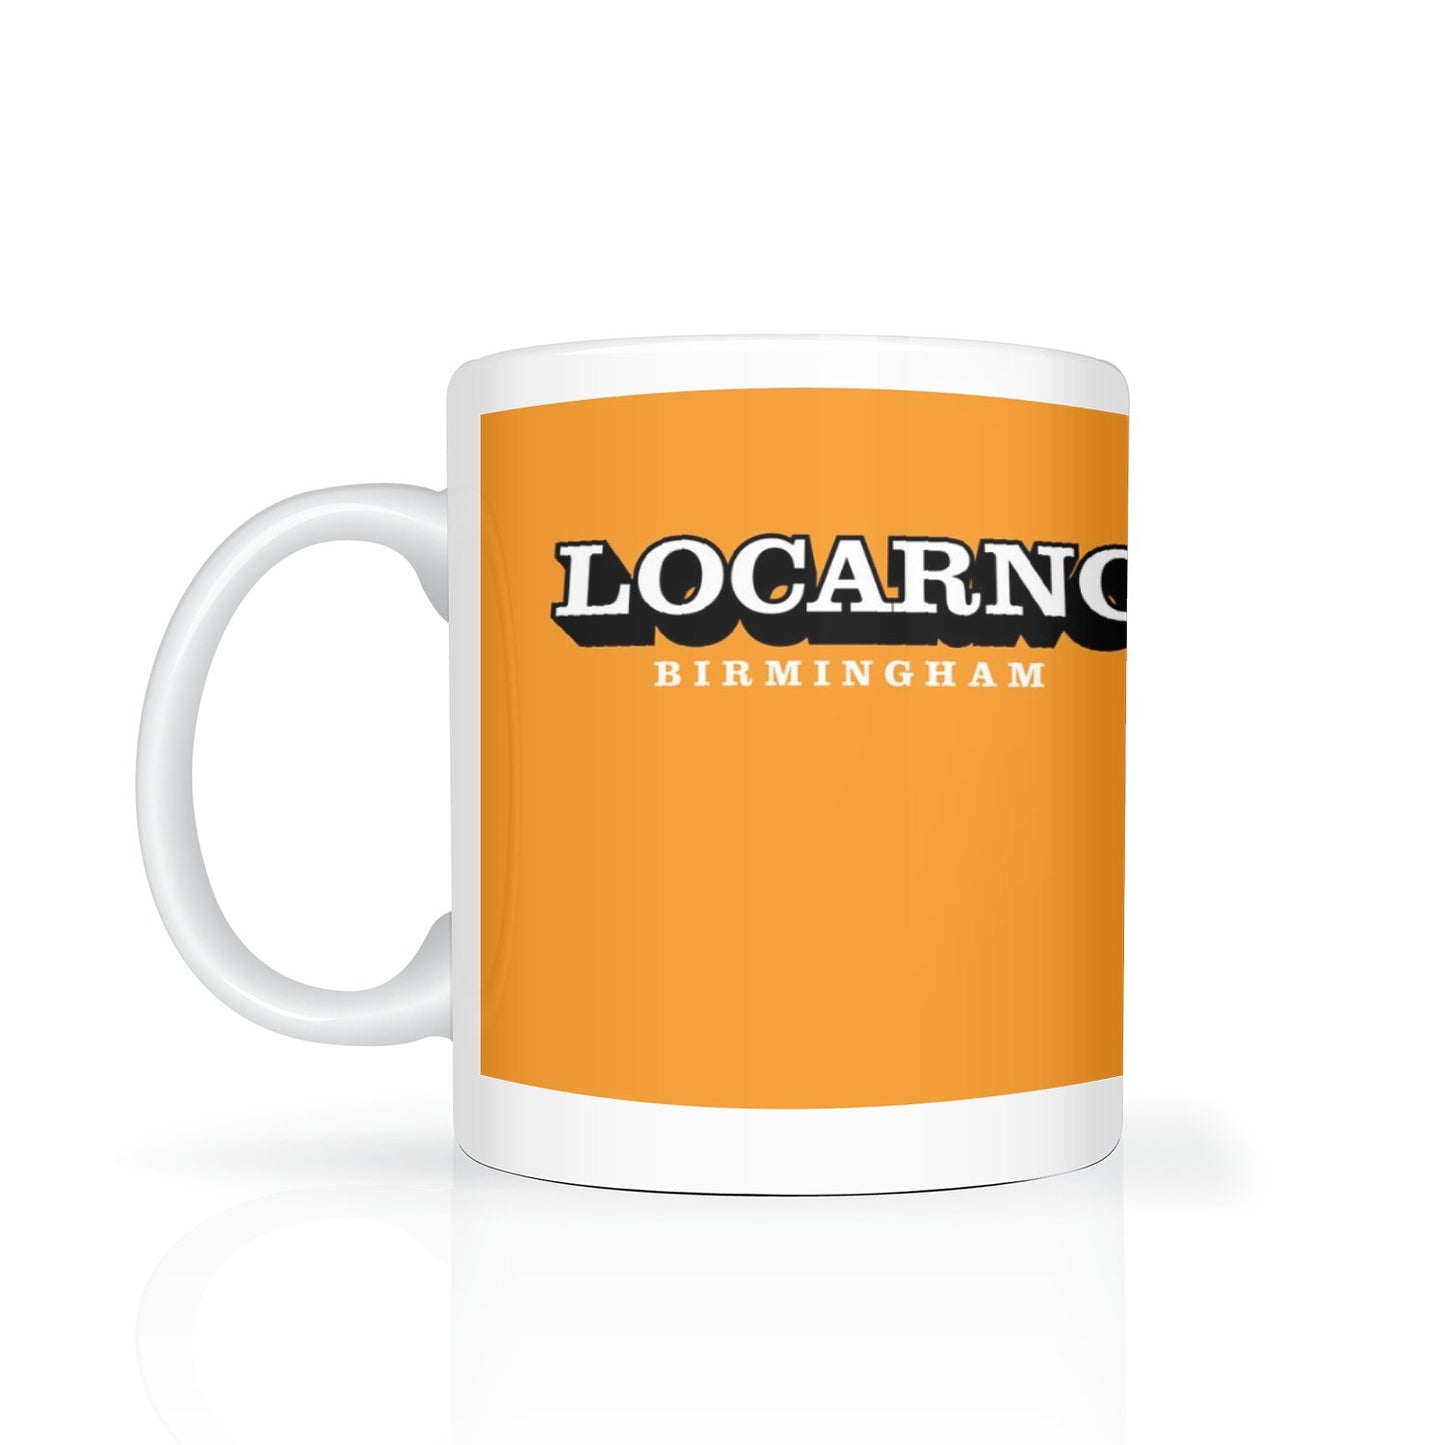 Locarno - Birmingham - mug - Dirty Stop Outs